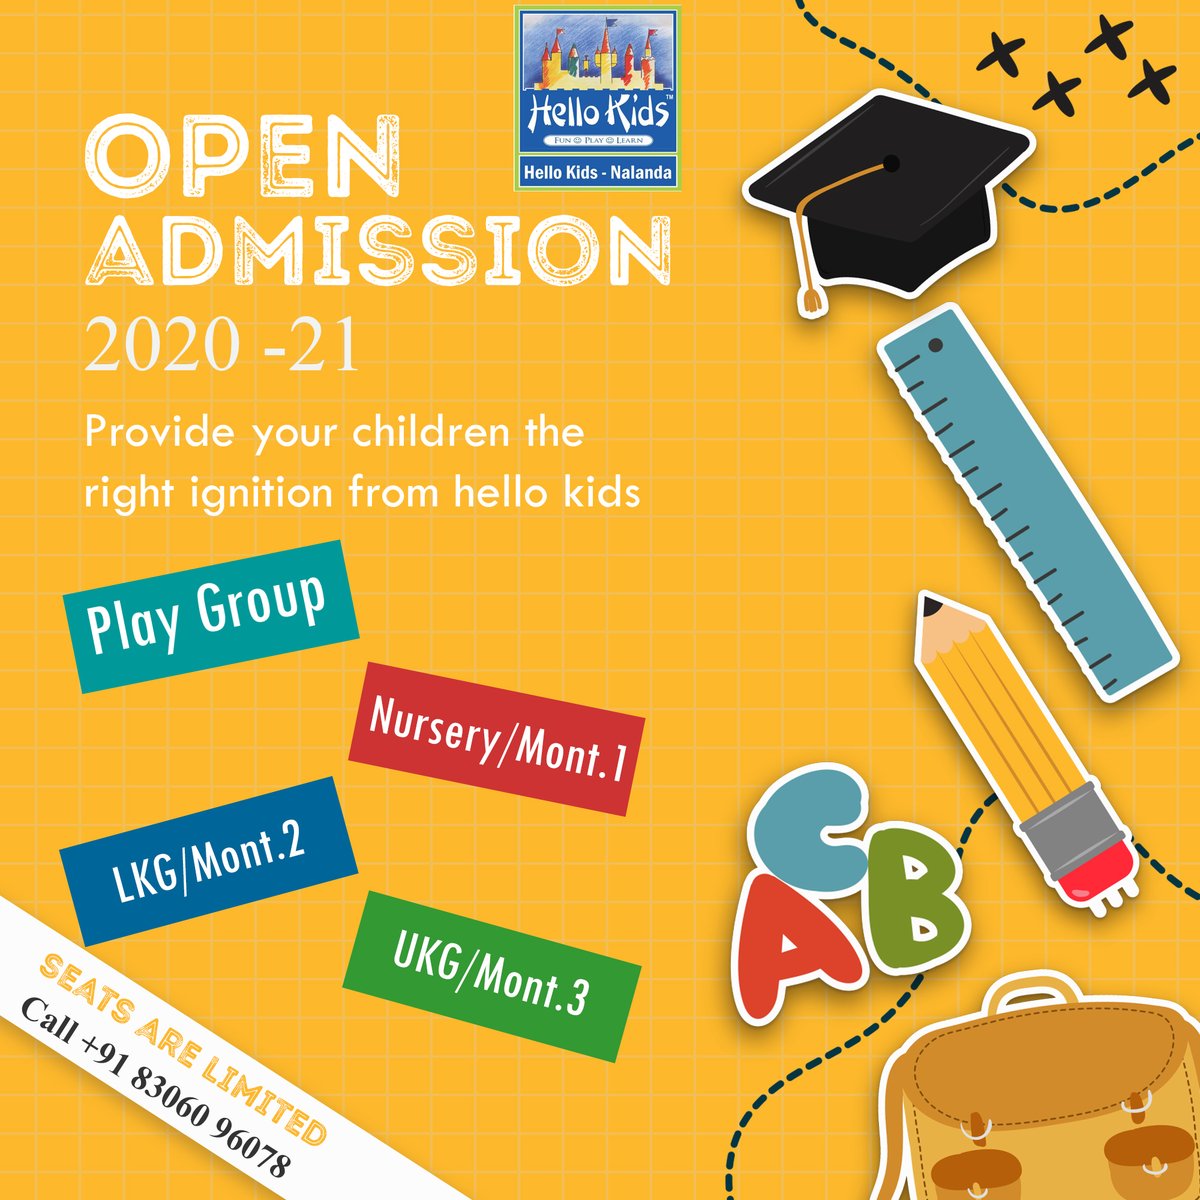 Admission Open 2020 - 21

#HelloKidsnalanda #PreSchool #ahmedabad #gujarat #Playschool #EarlyChildhood #School #Kids #India #PlayHome #Kindergarten #PlayGroup #Nursery #LKG #UKG #Montessori #AdmissionOpen2020-21

Contact: +91 83060 96078, 99244 41370